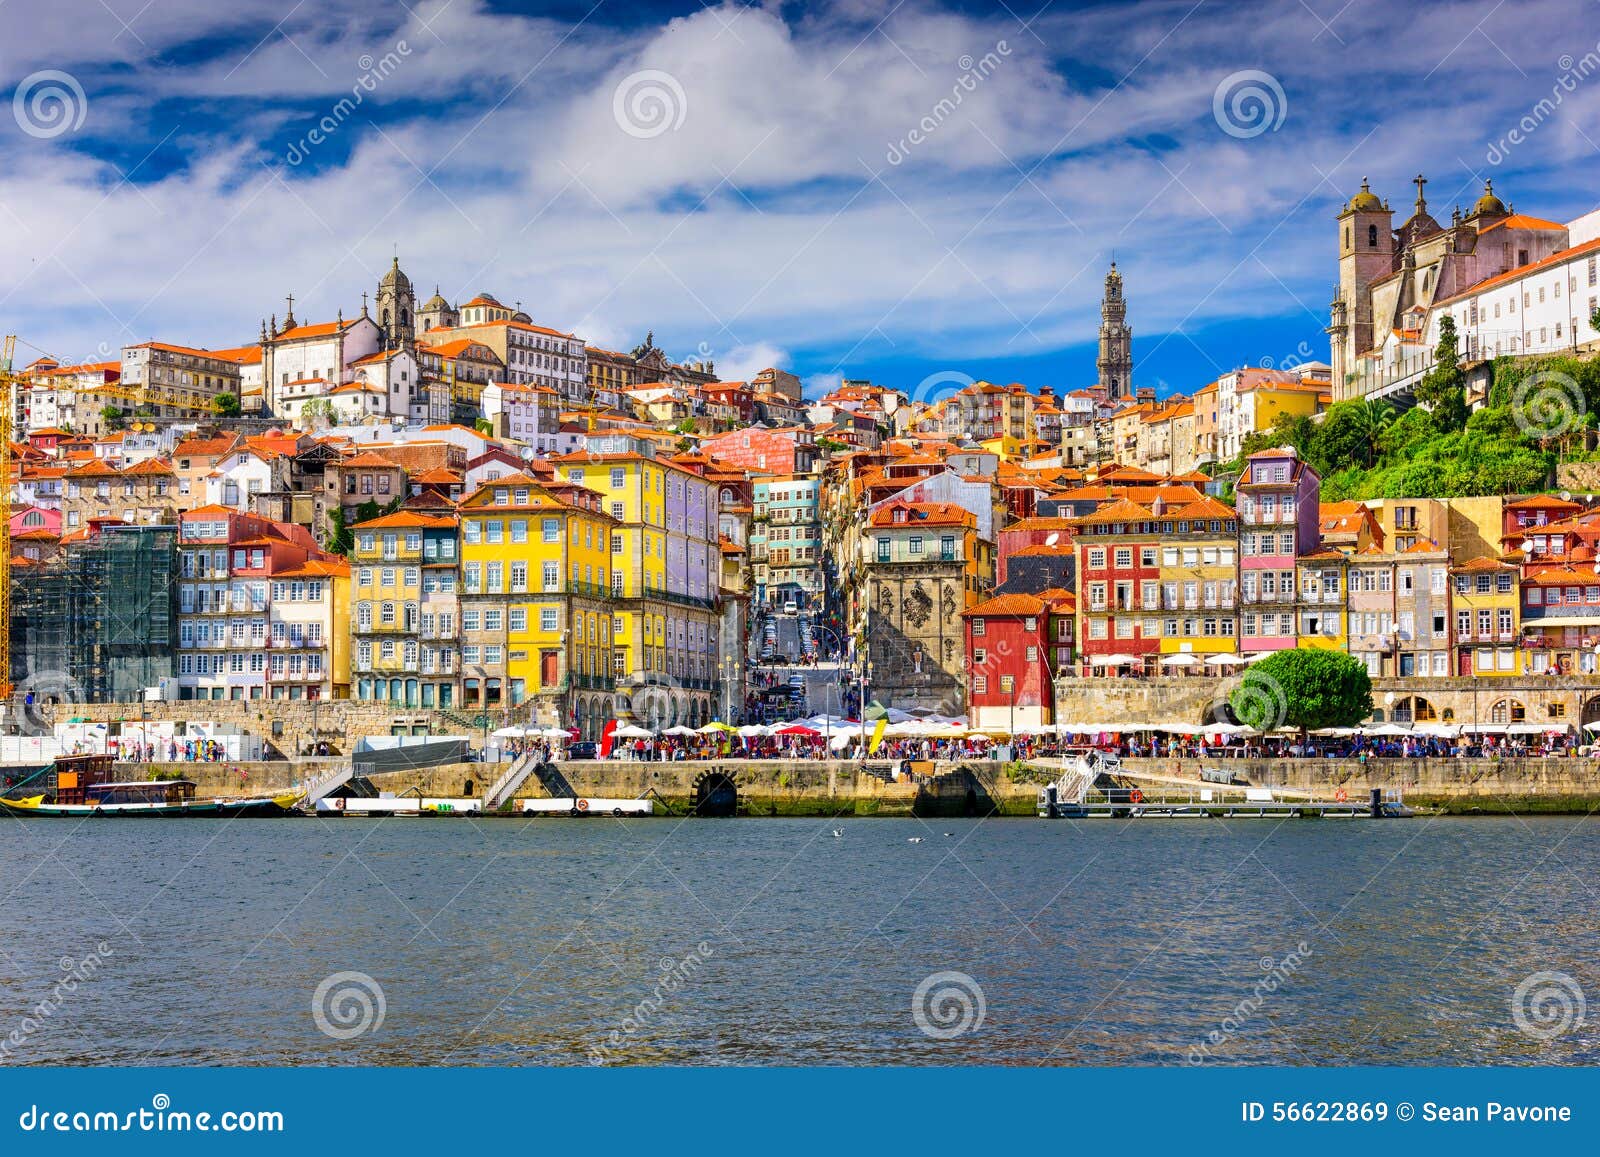 porto portugal skyline